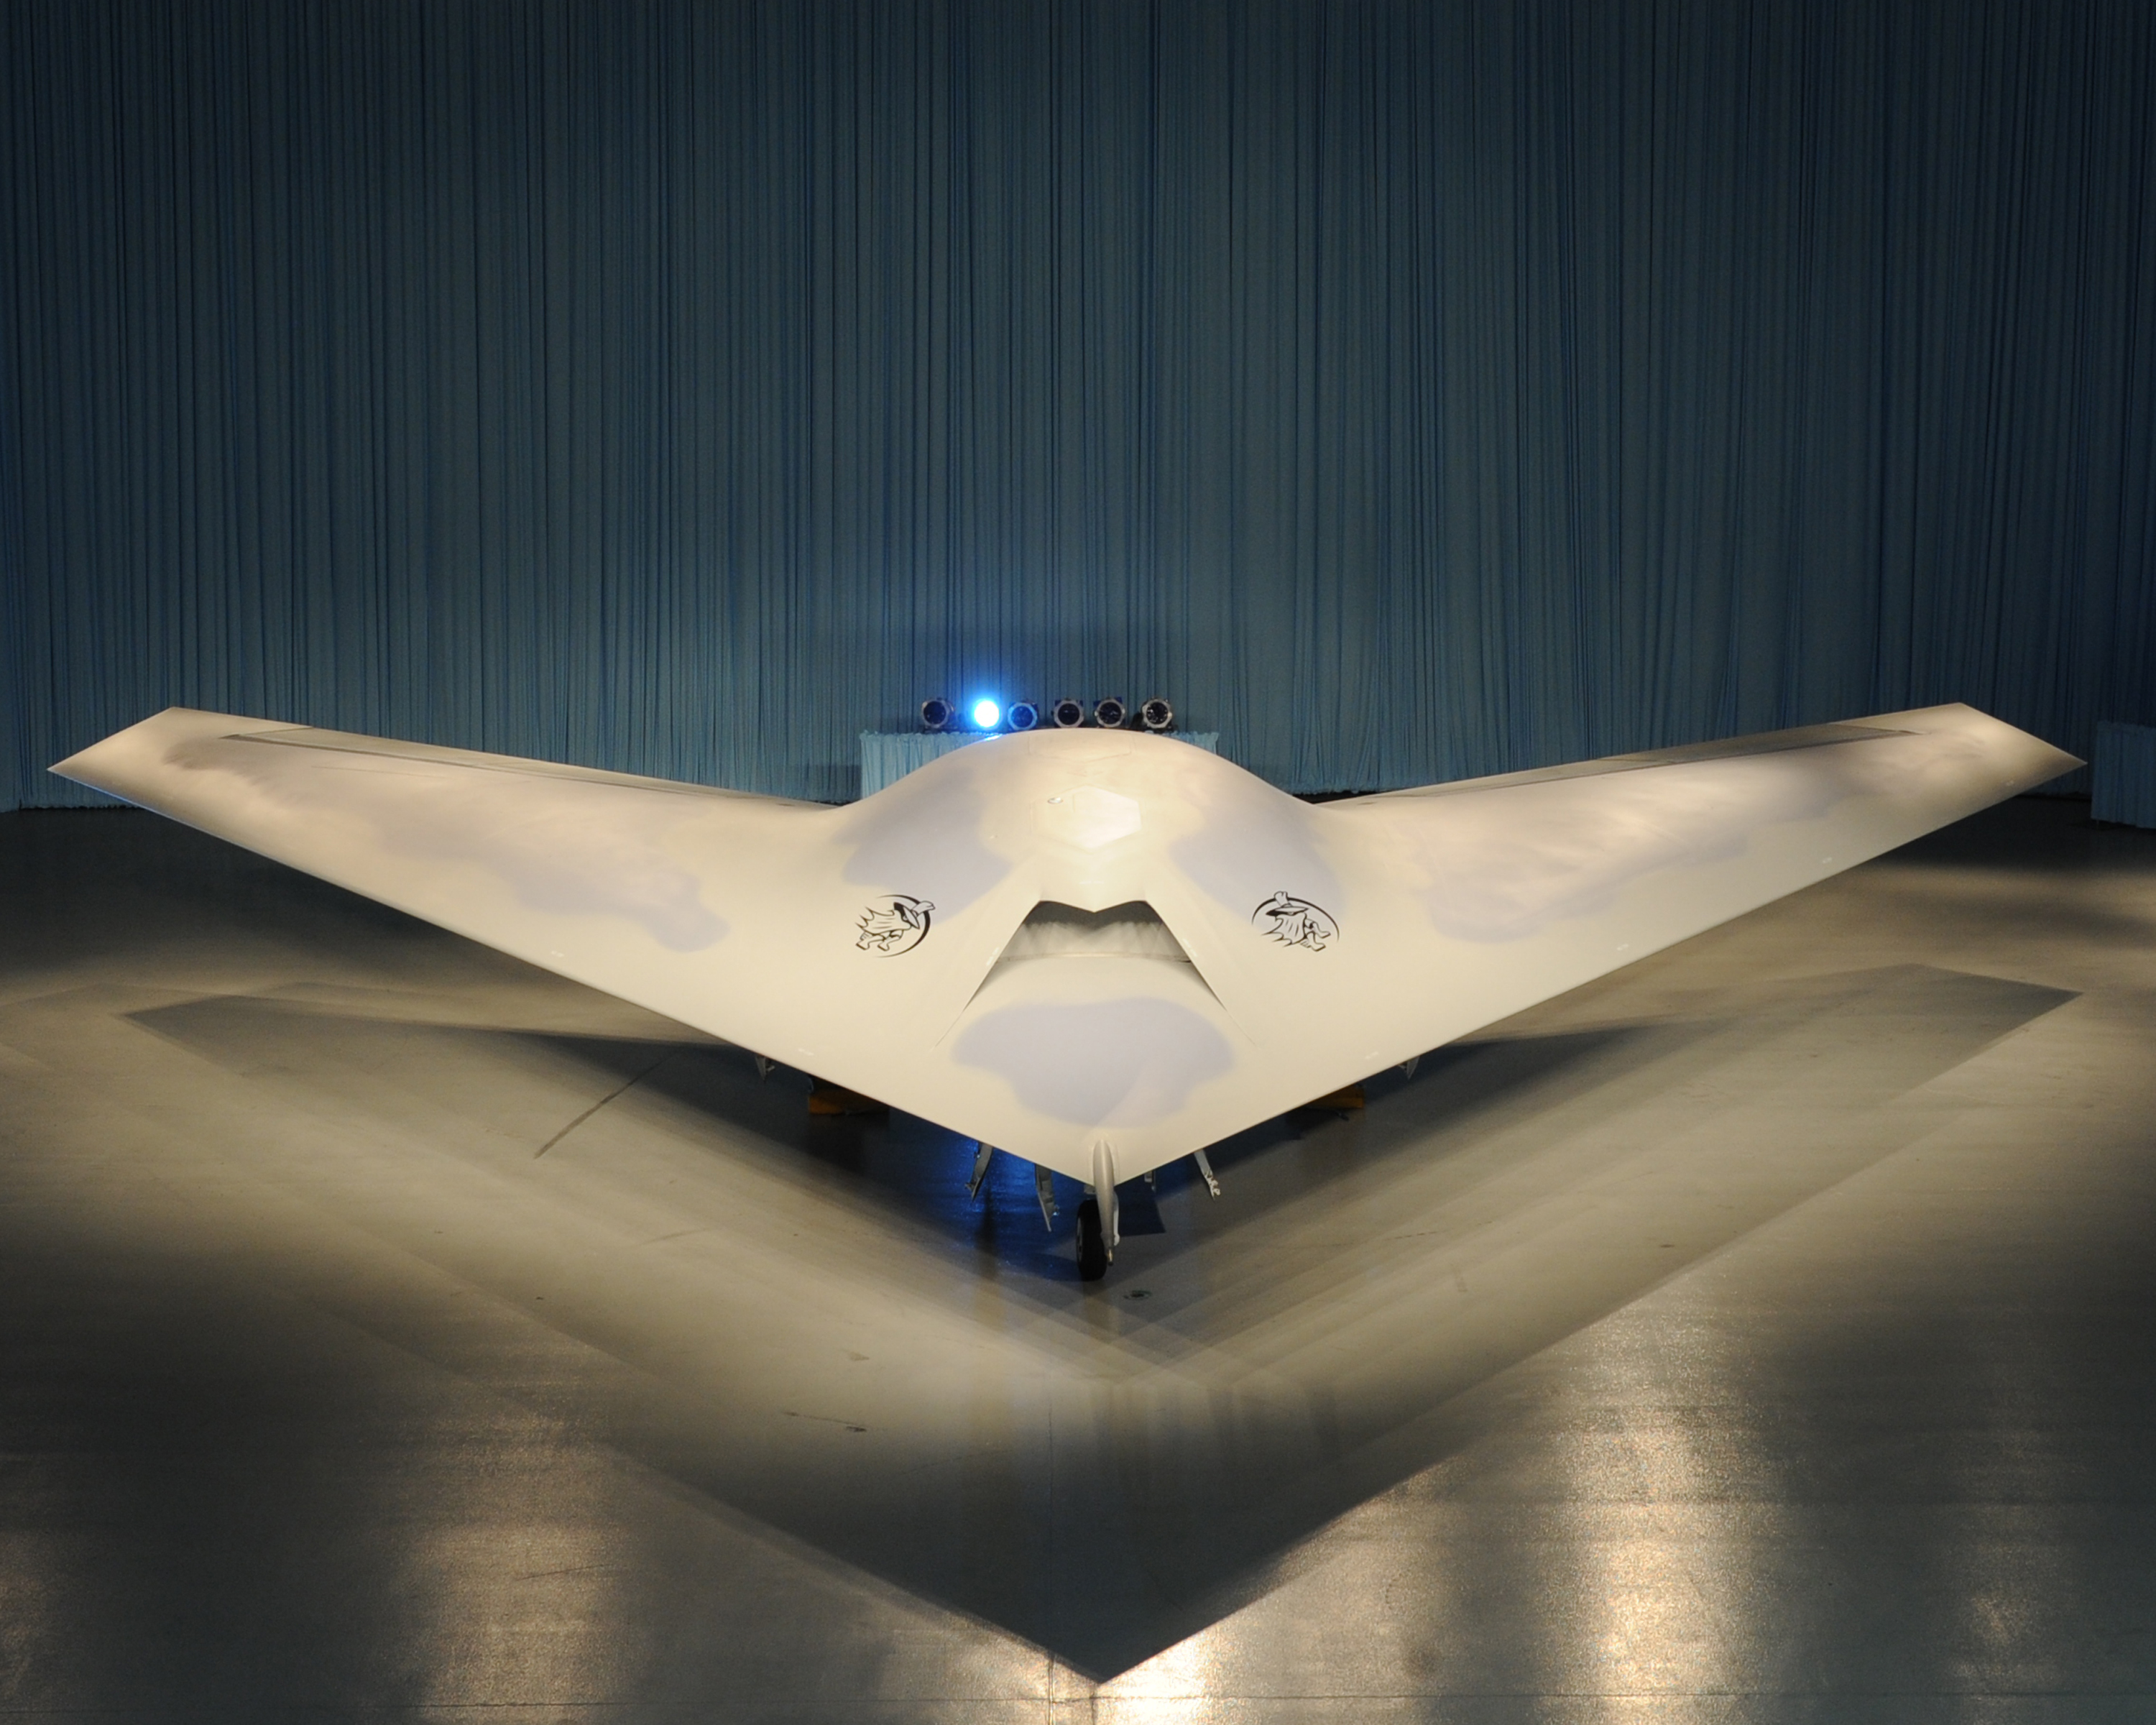 Boeing's Phantom Ray